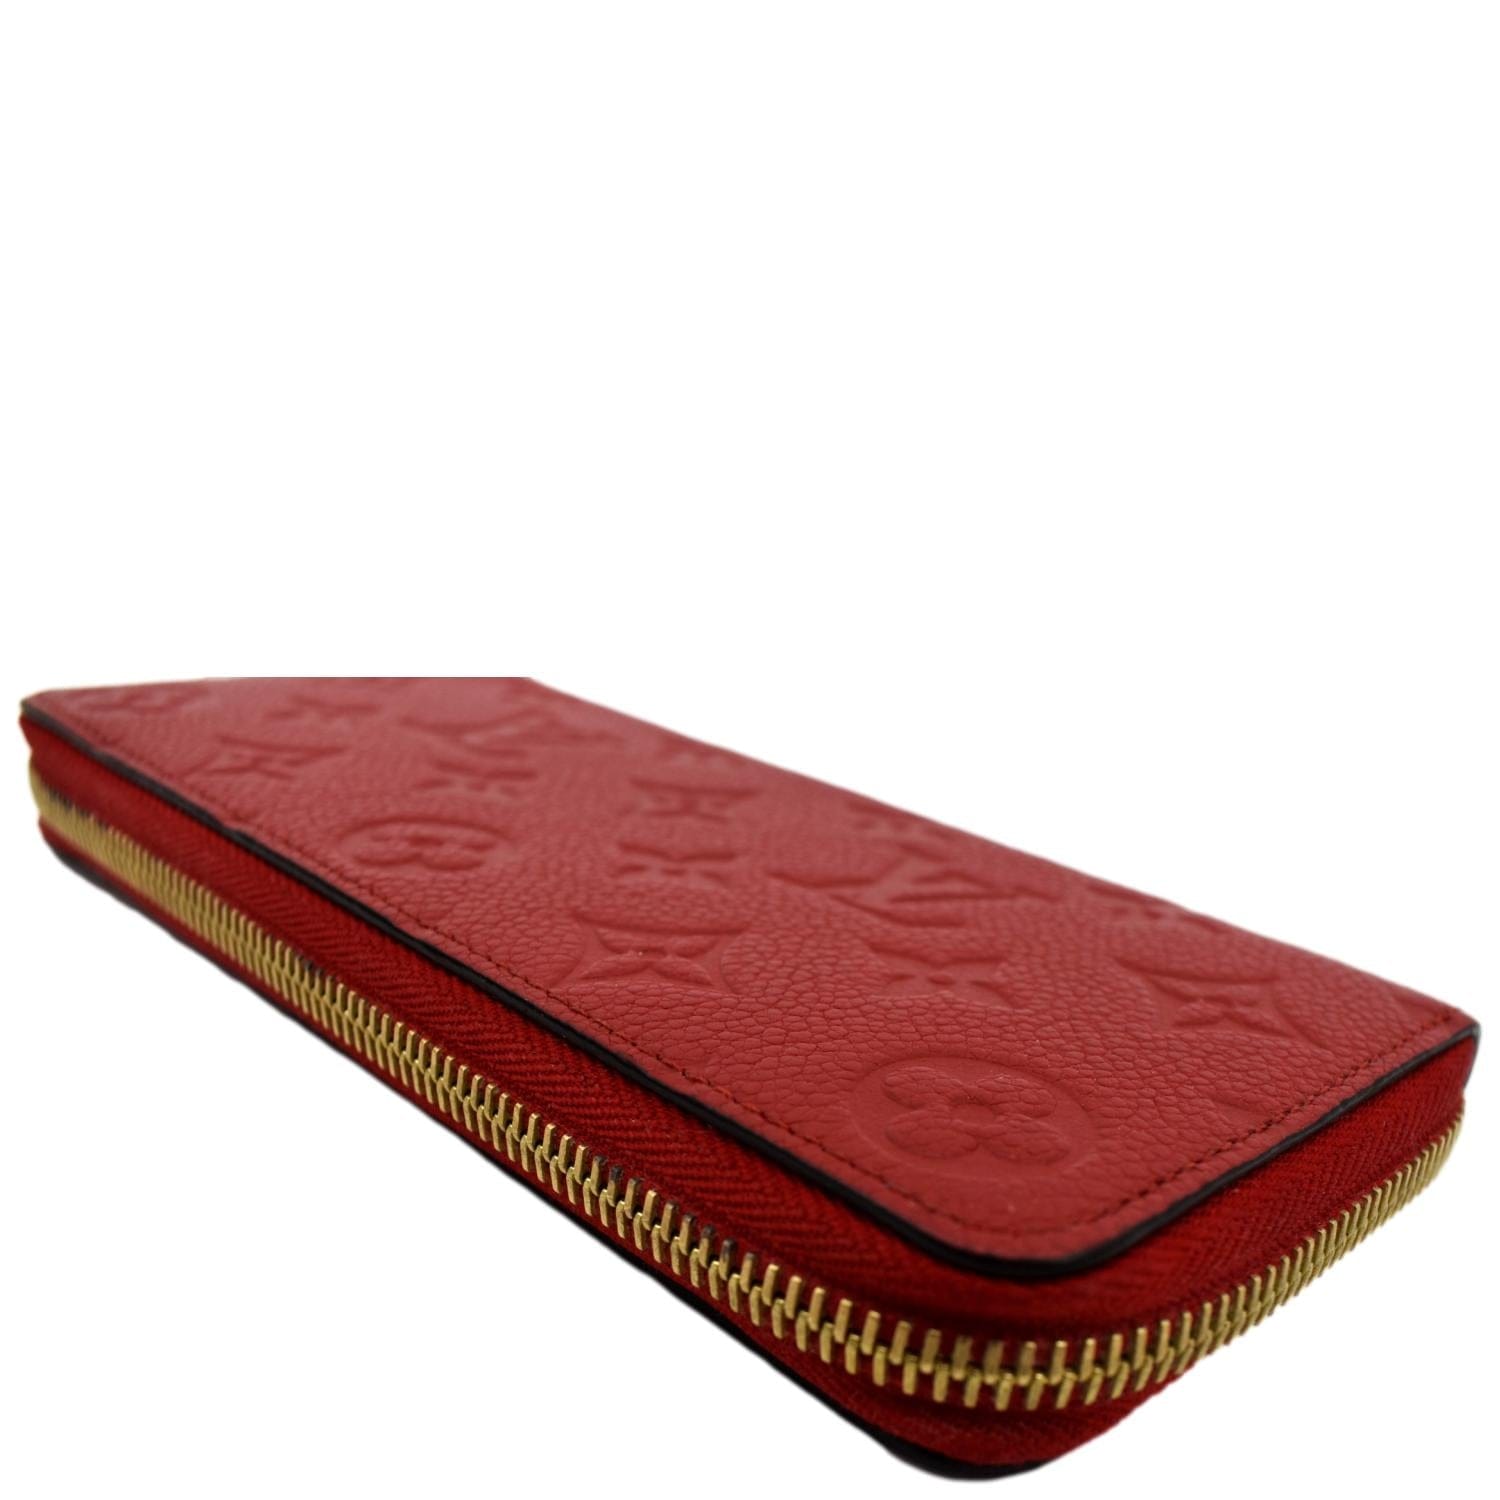 Louis Vuitton Clemence Empreinte Leather Wallet